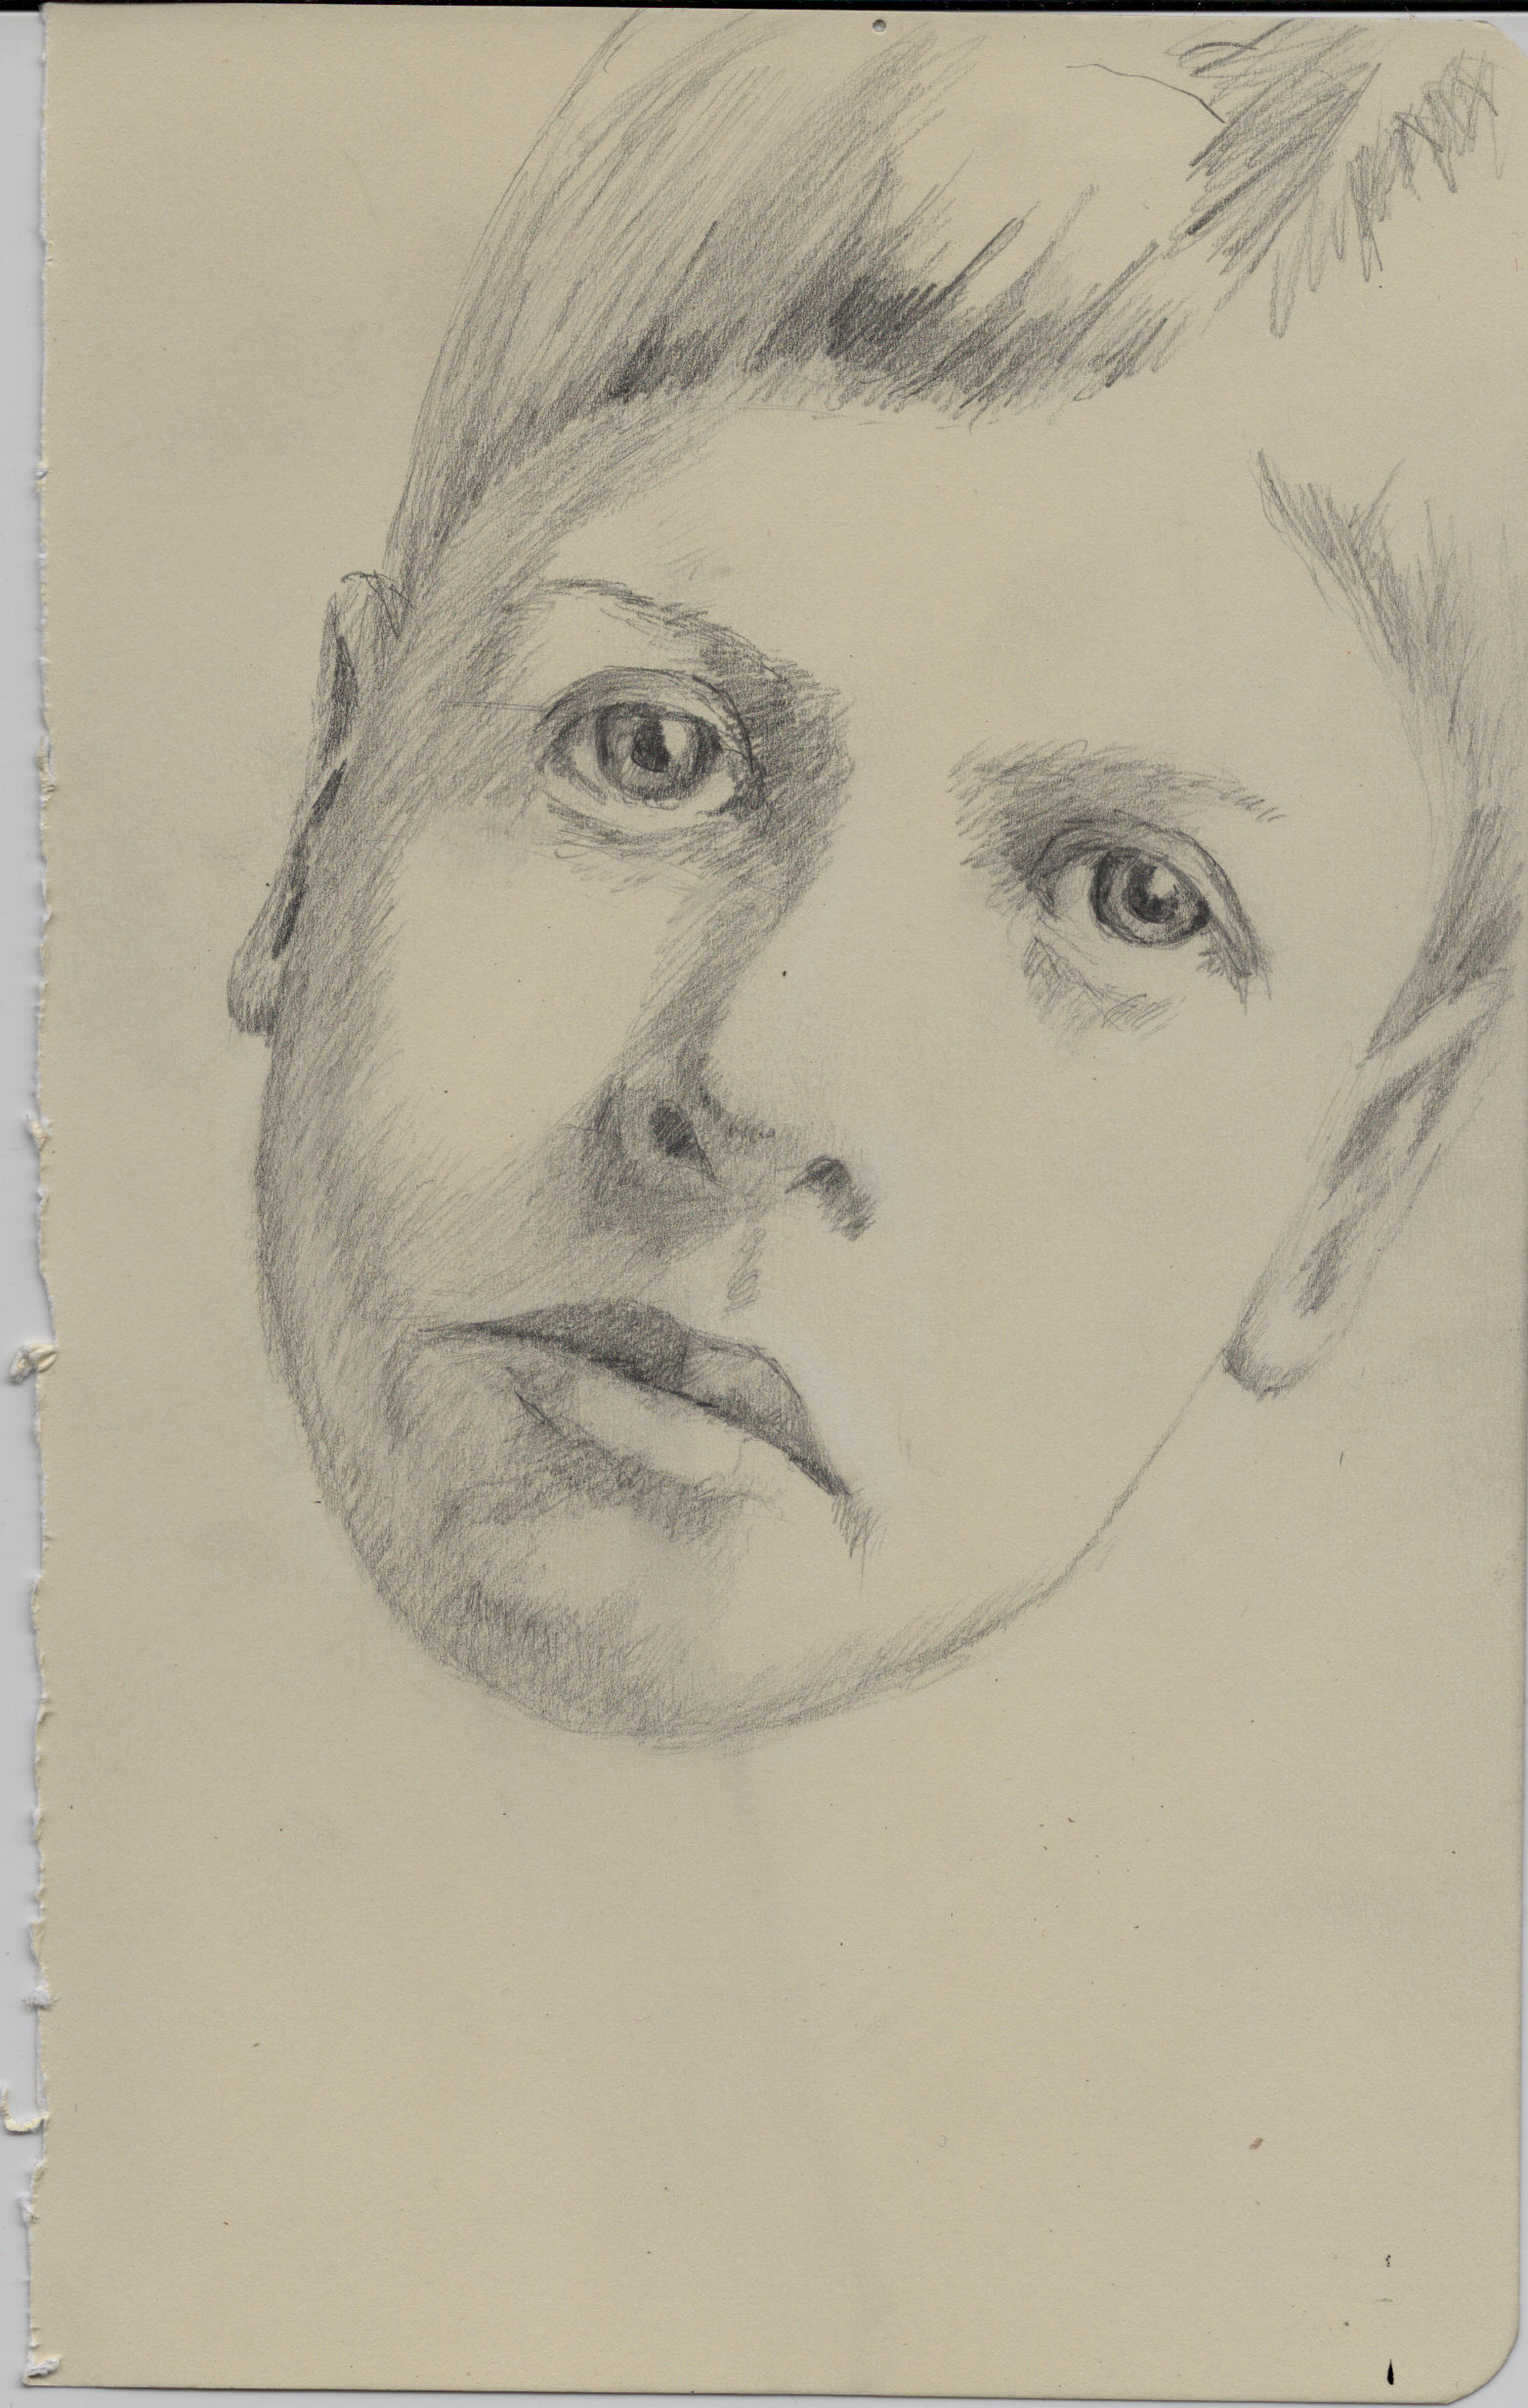 Edward Hopper at age 8